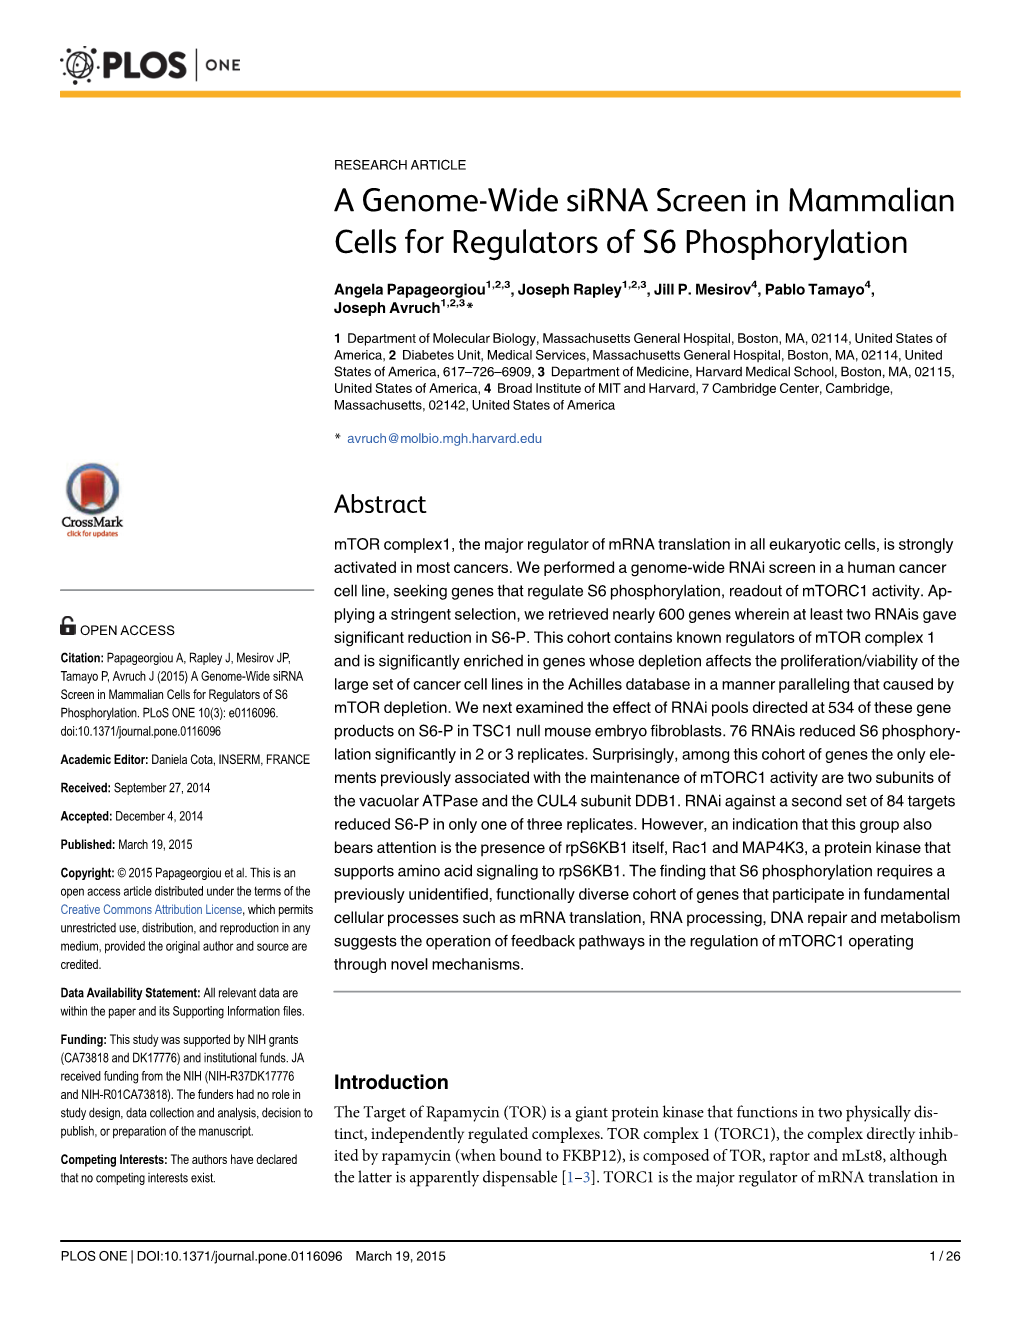 A Genome-Wide Sirna Screen in Mammalian Cells for Regulators of S6 Phosphorylation